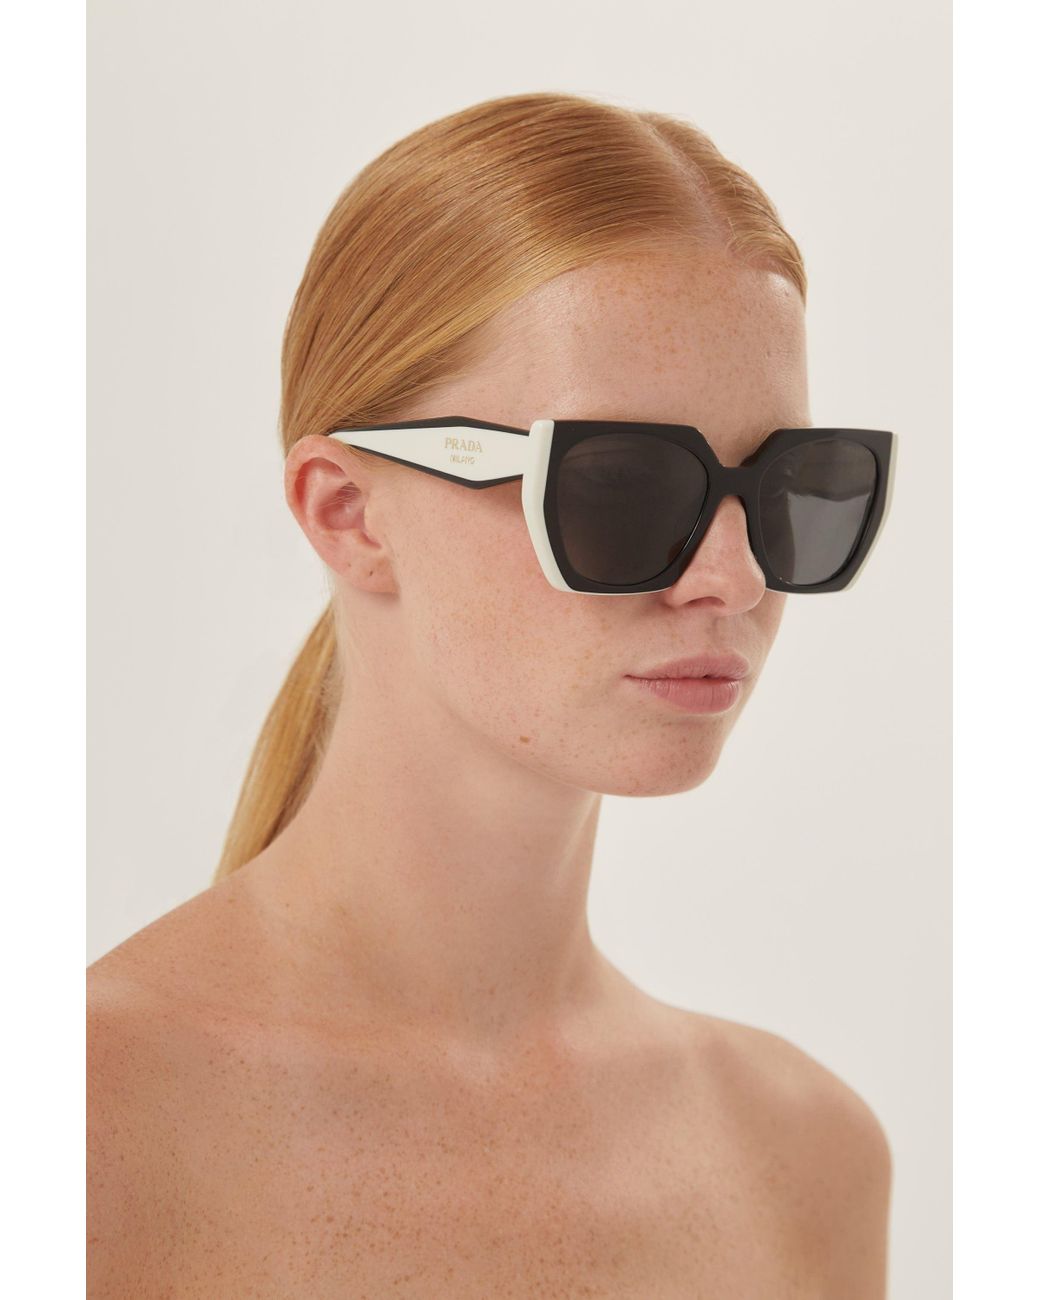 Prada Oversized Cat Eye Black And White Sunglasses in Brown | Lyst